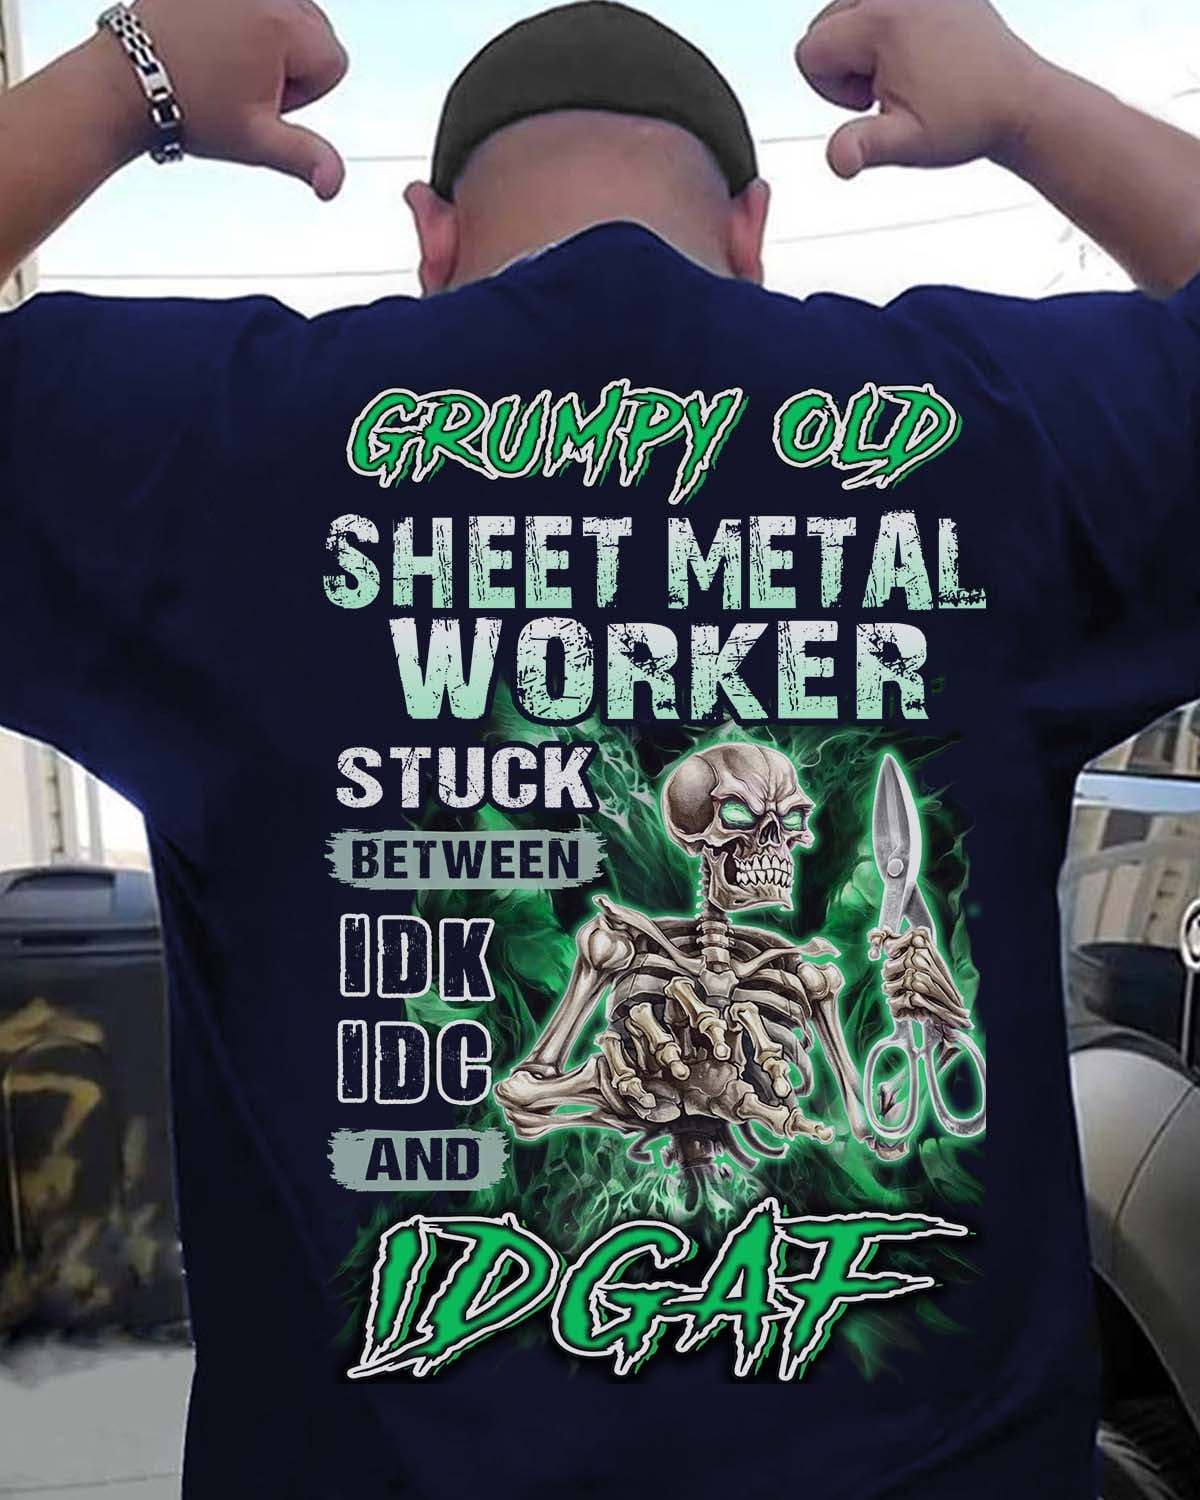 Grumpy Skull - Grumpy old sheet metal worker stuck between idk idc and idgaf